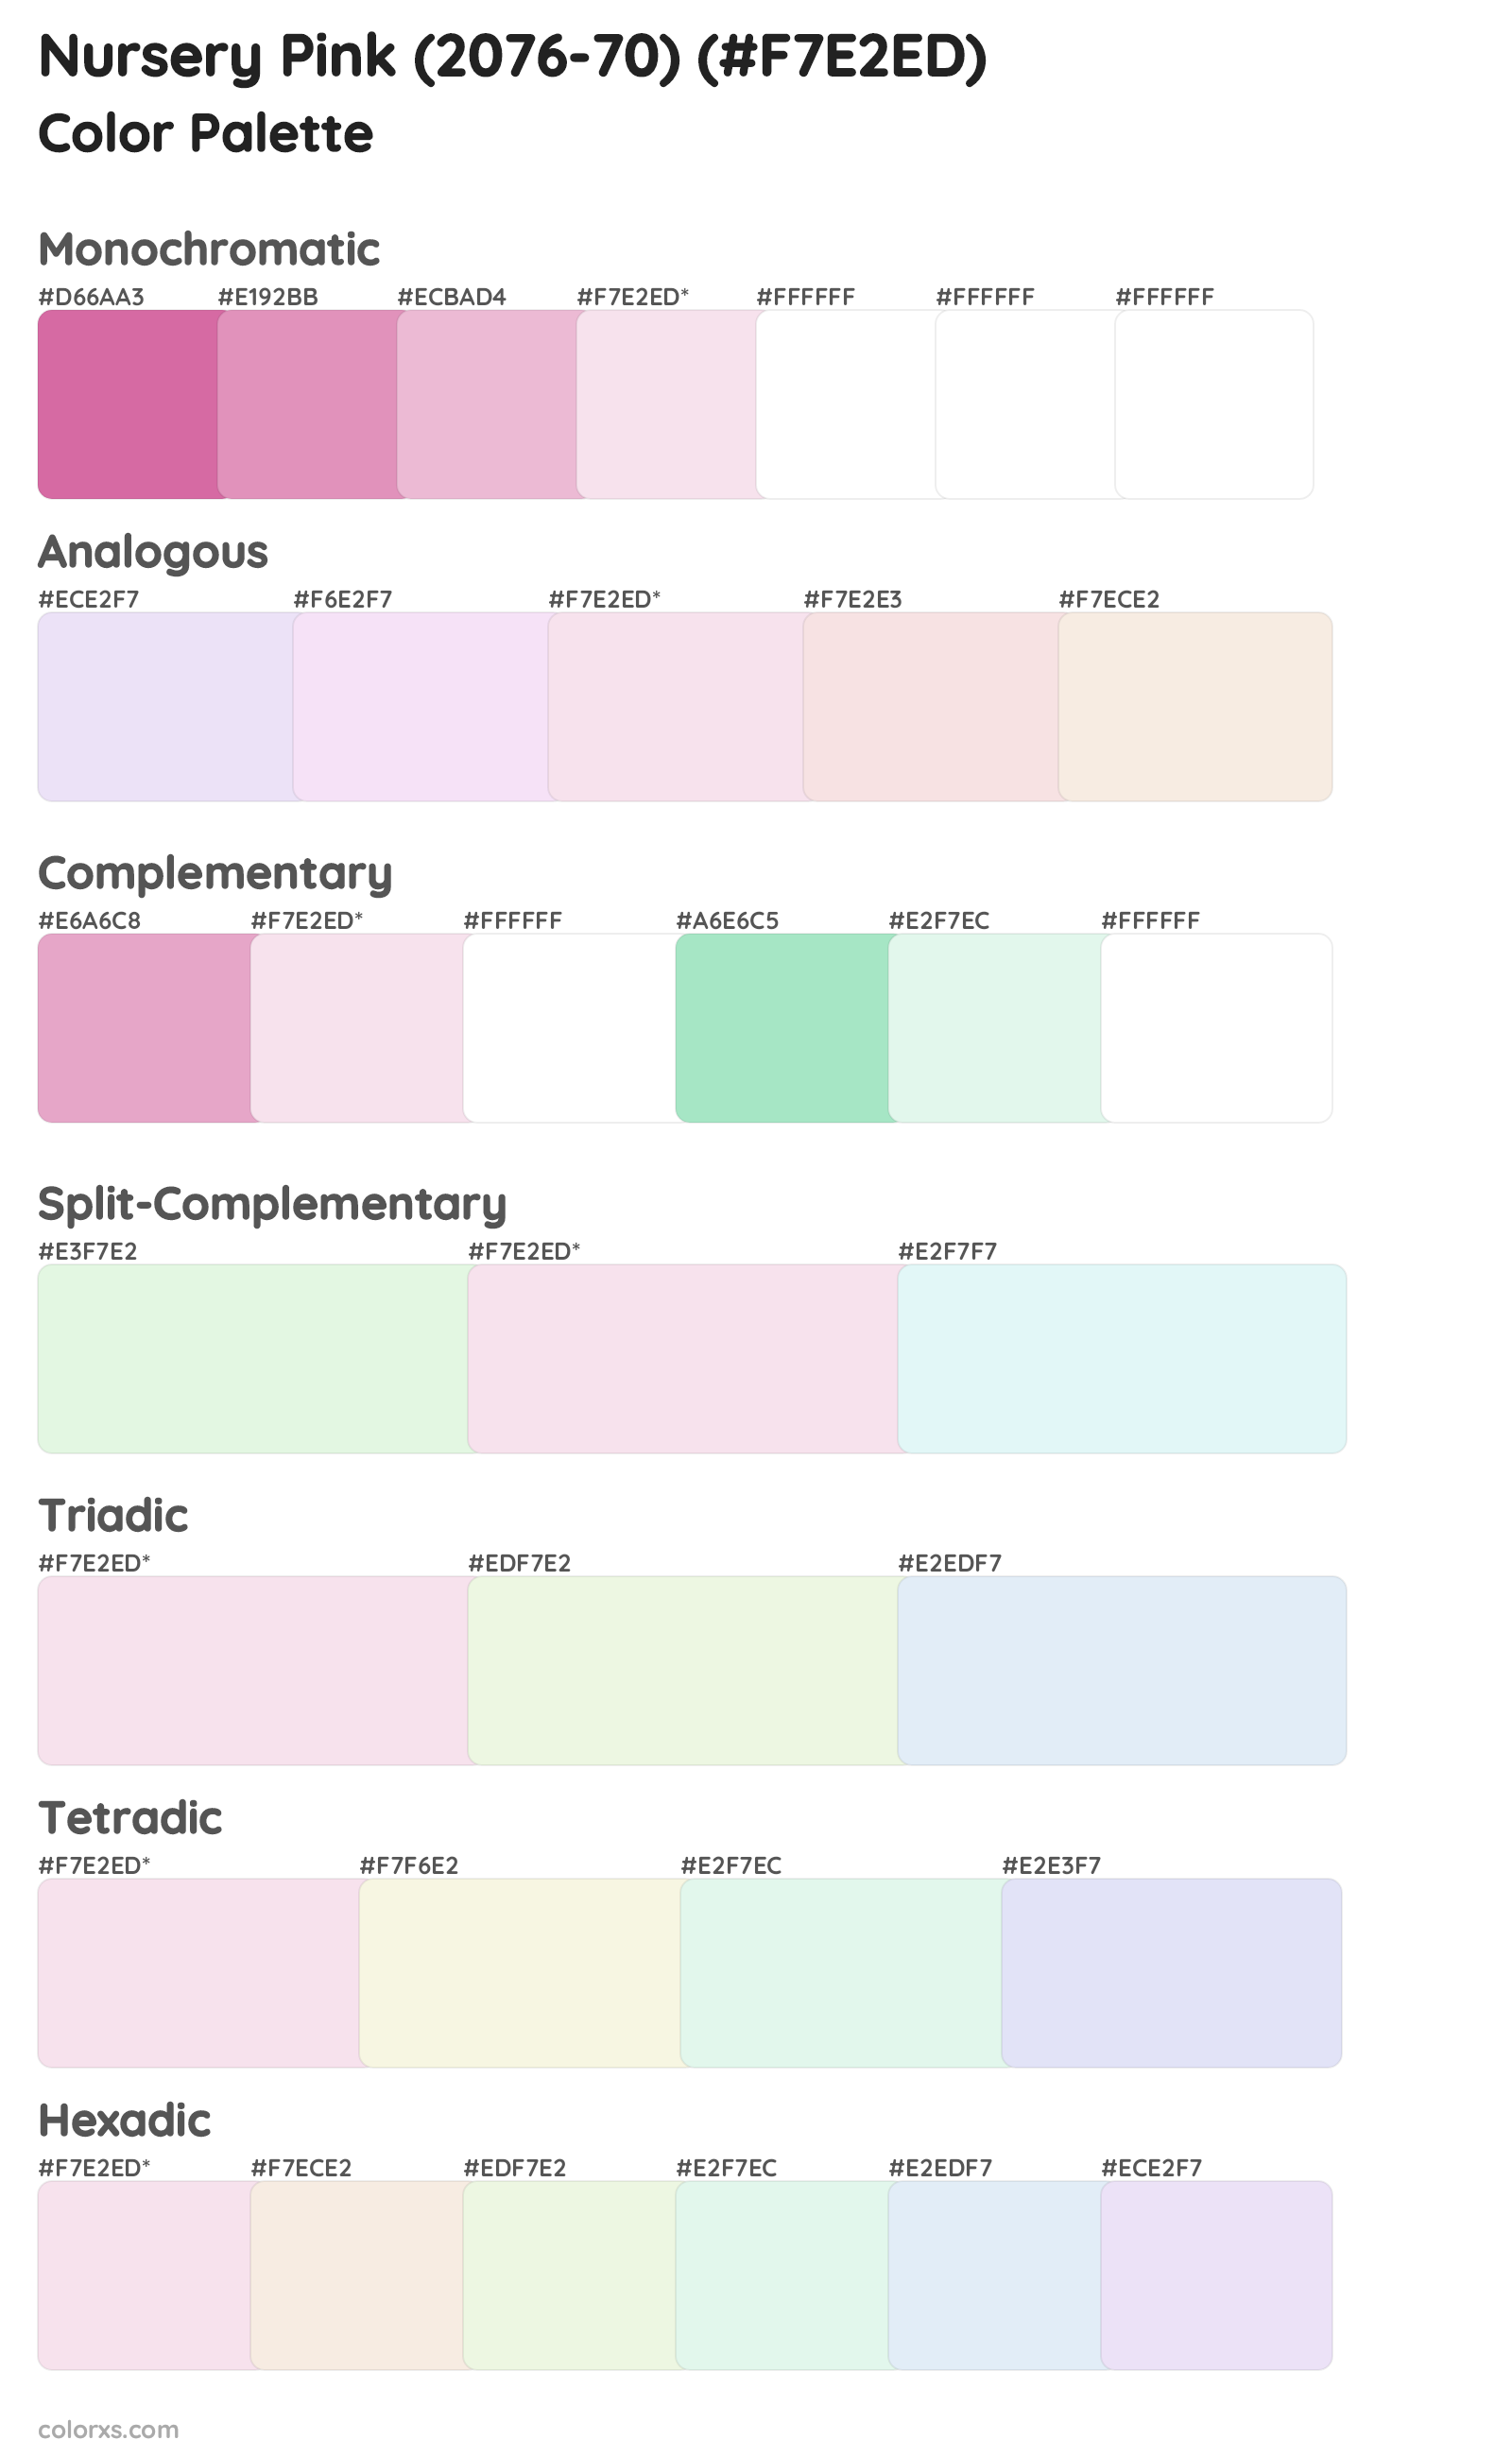 Nursery Pink (2076-70) Color Scheme Palettes